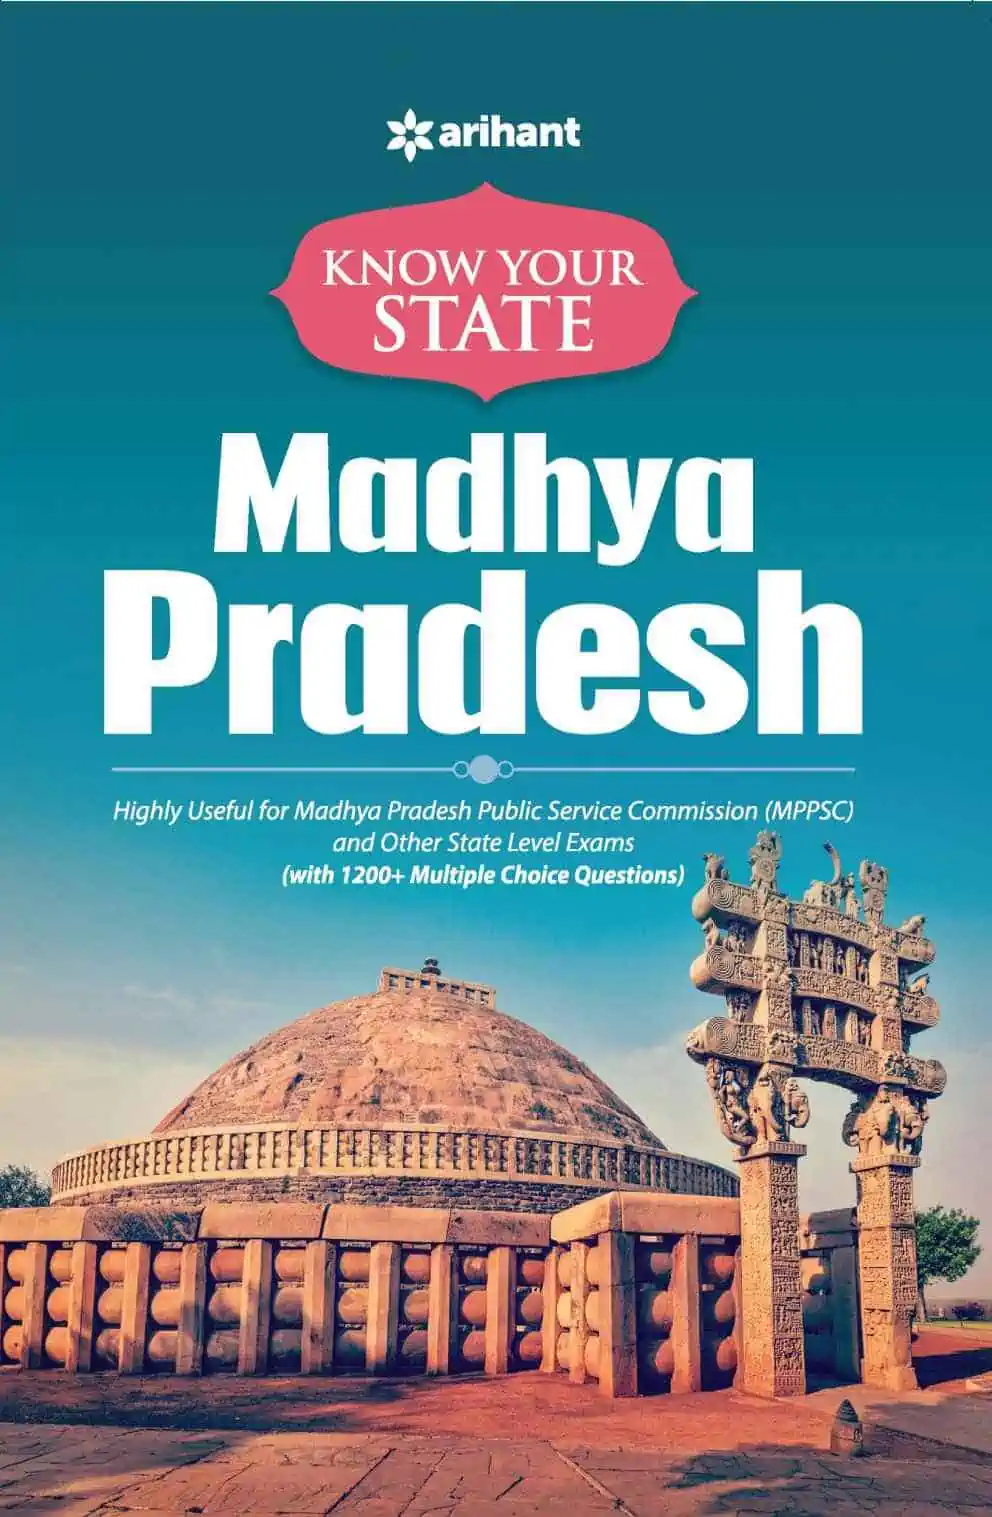 Know Your State - Madhya Pradesh by Arihant PDF